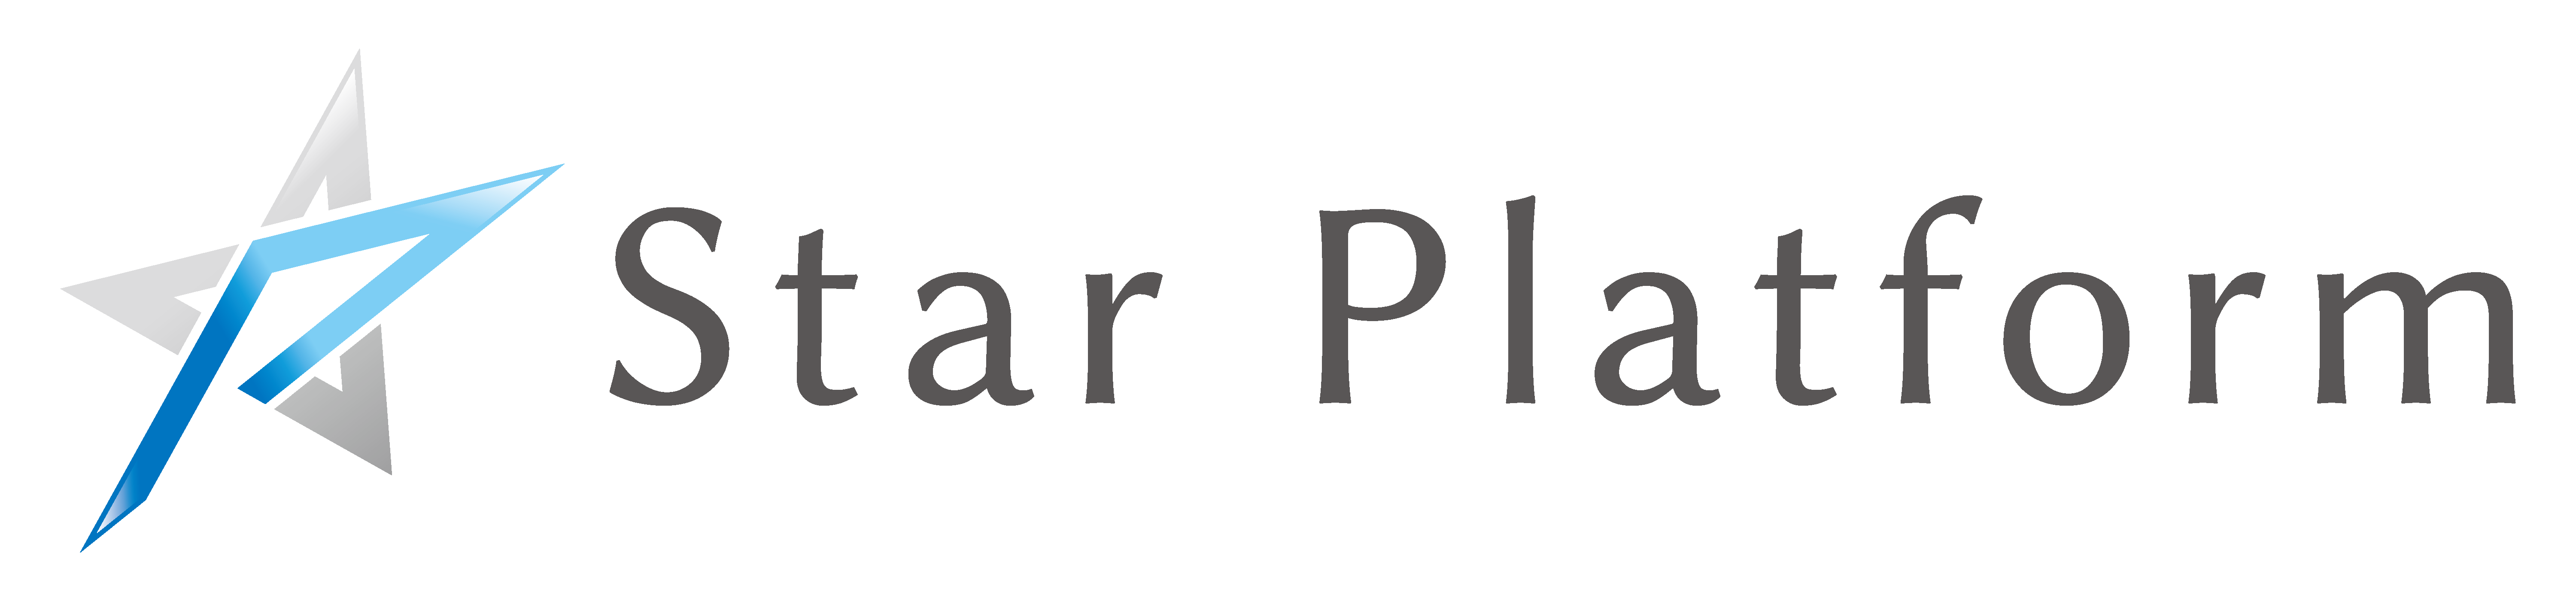 Star Platform